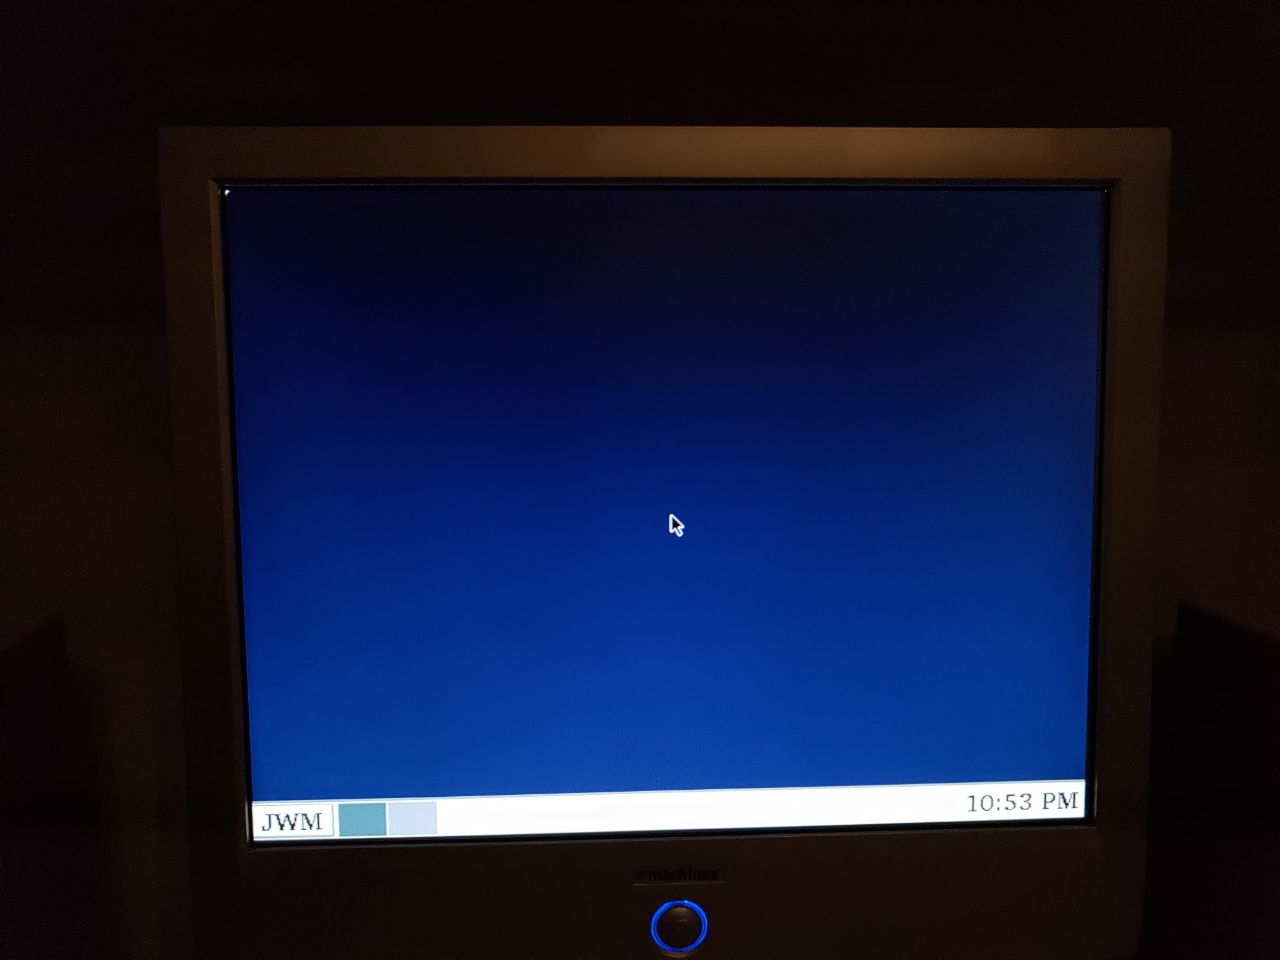 The X11 Desktop